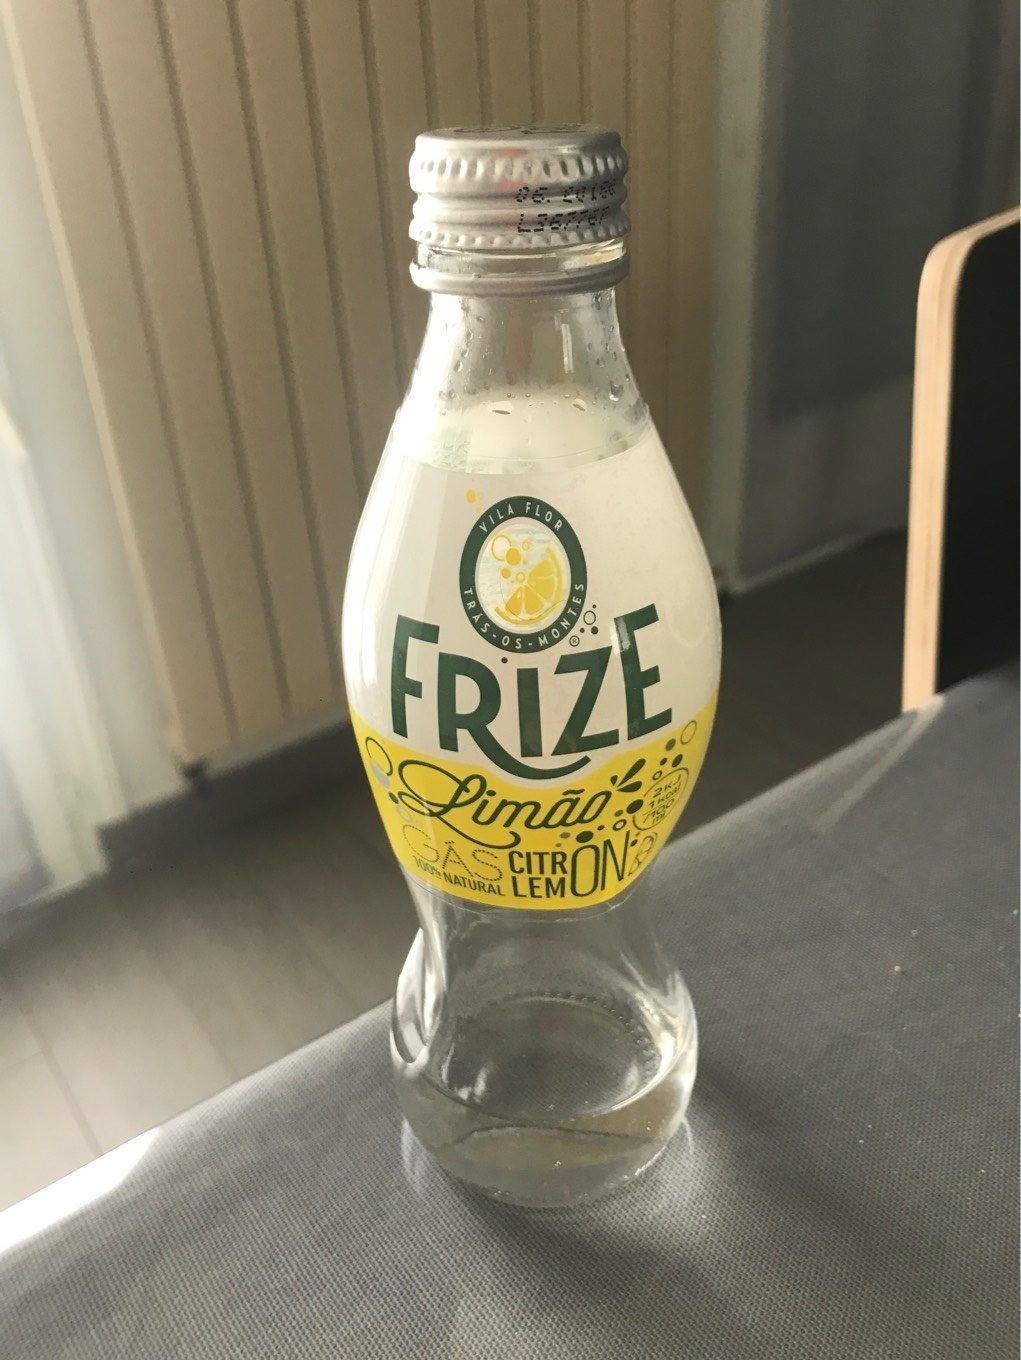 Frize limao - Product - fr